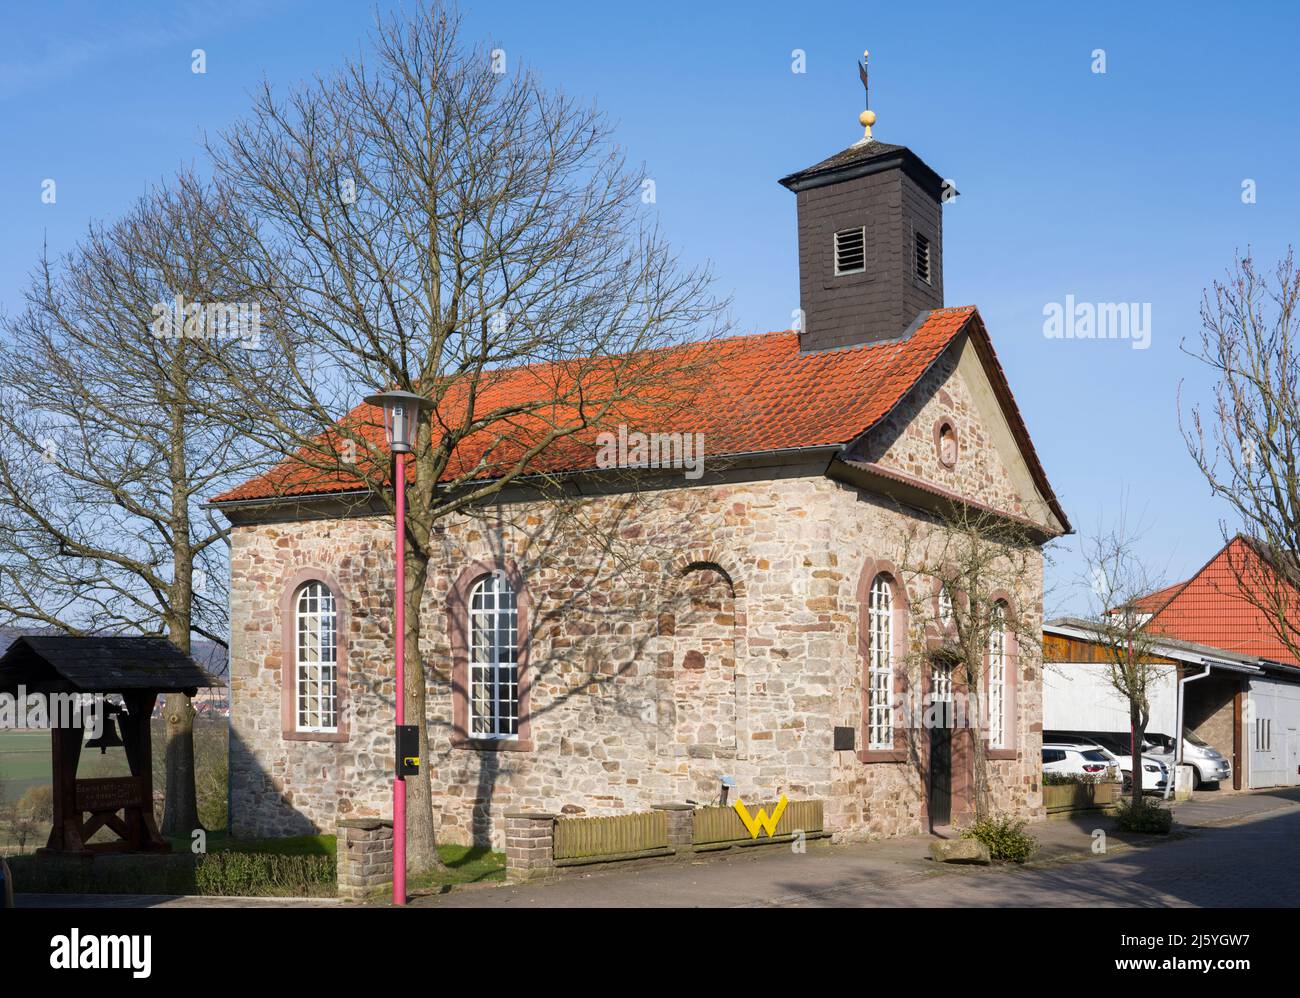 Bâtiment de l'église Waldensienne, XVIIIe siècle, village de Gewissenruh, Wesertal, Weserbergland,Hesse, Allemagne Banque D'Images